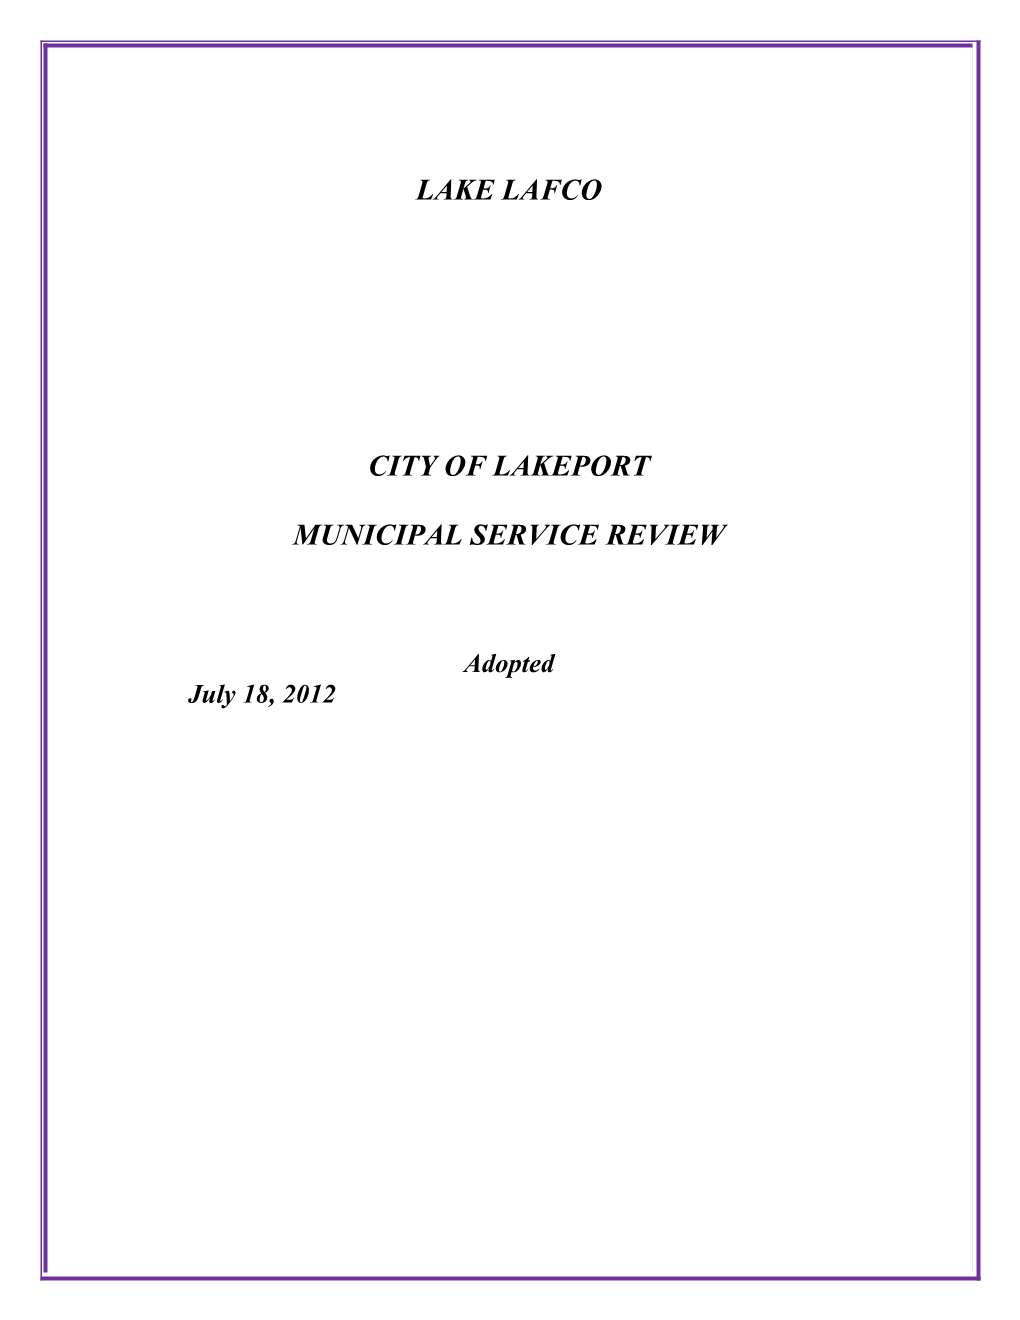 City of Lakeport Msr